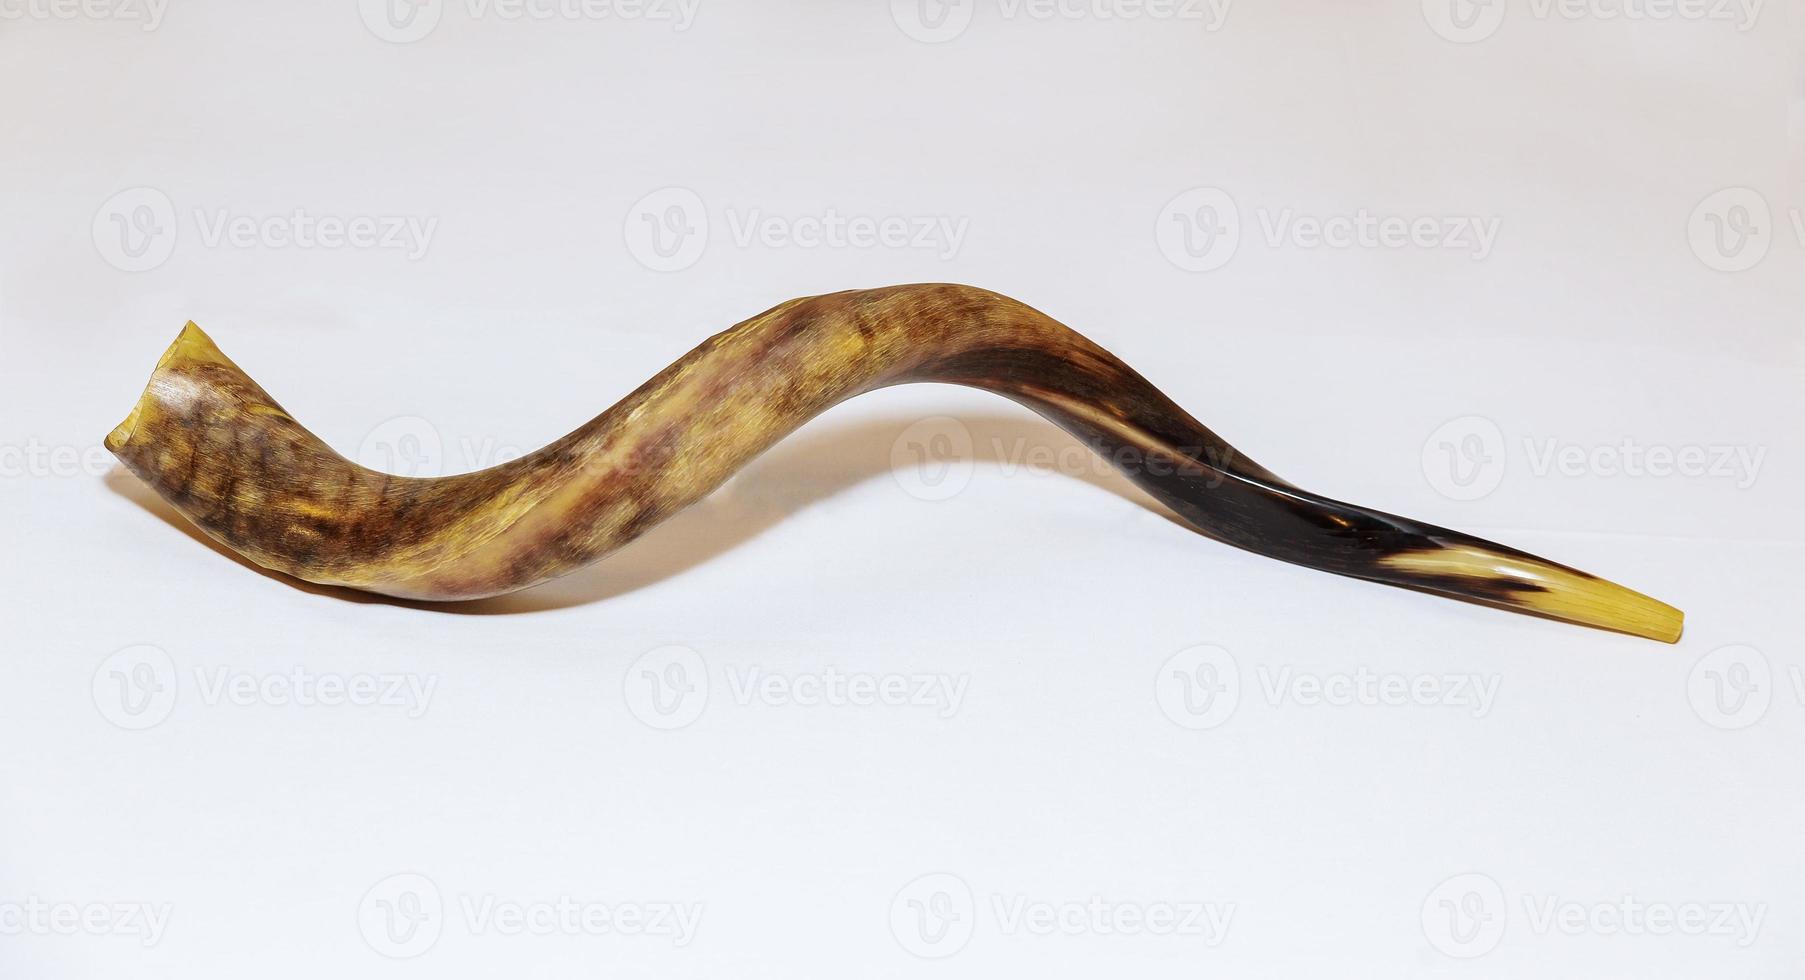 shofar un' tallit su bianca sfondo - Rosh hashanah ebreo vacanza concetto foto